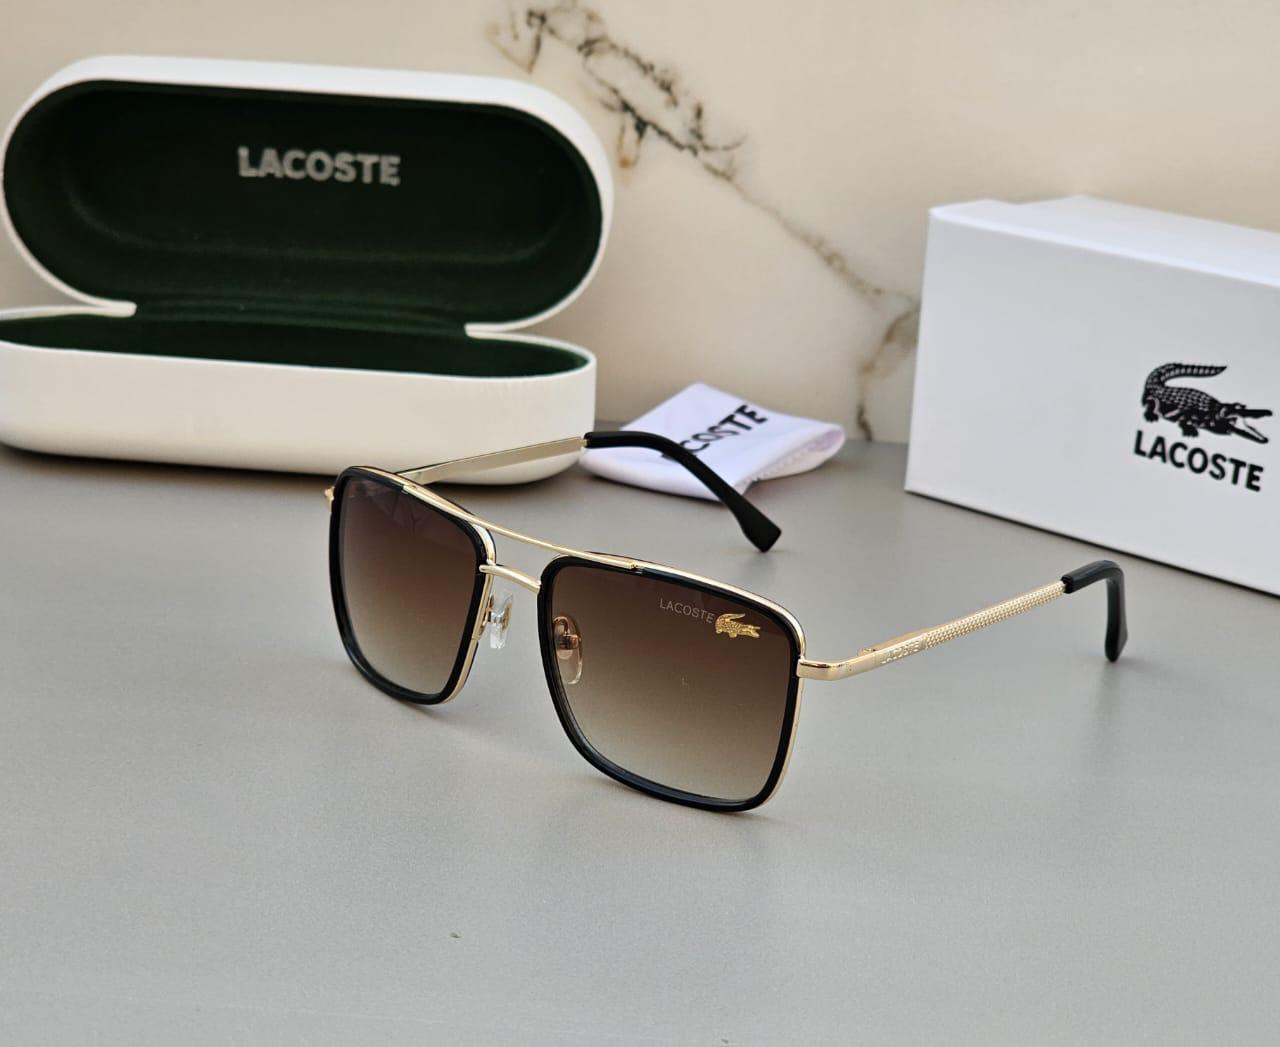 Lacoste L222SE - Best Price and Available as Prescription Sunglasses